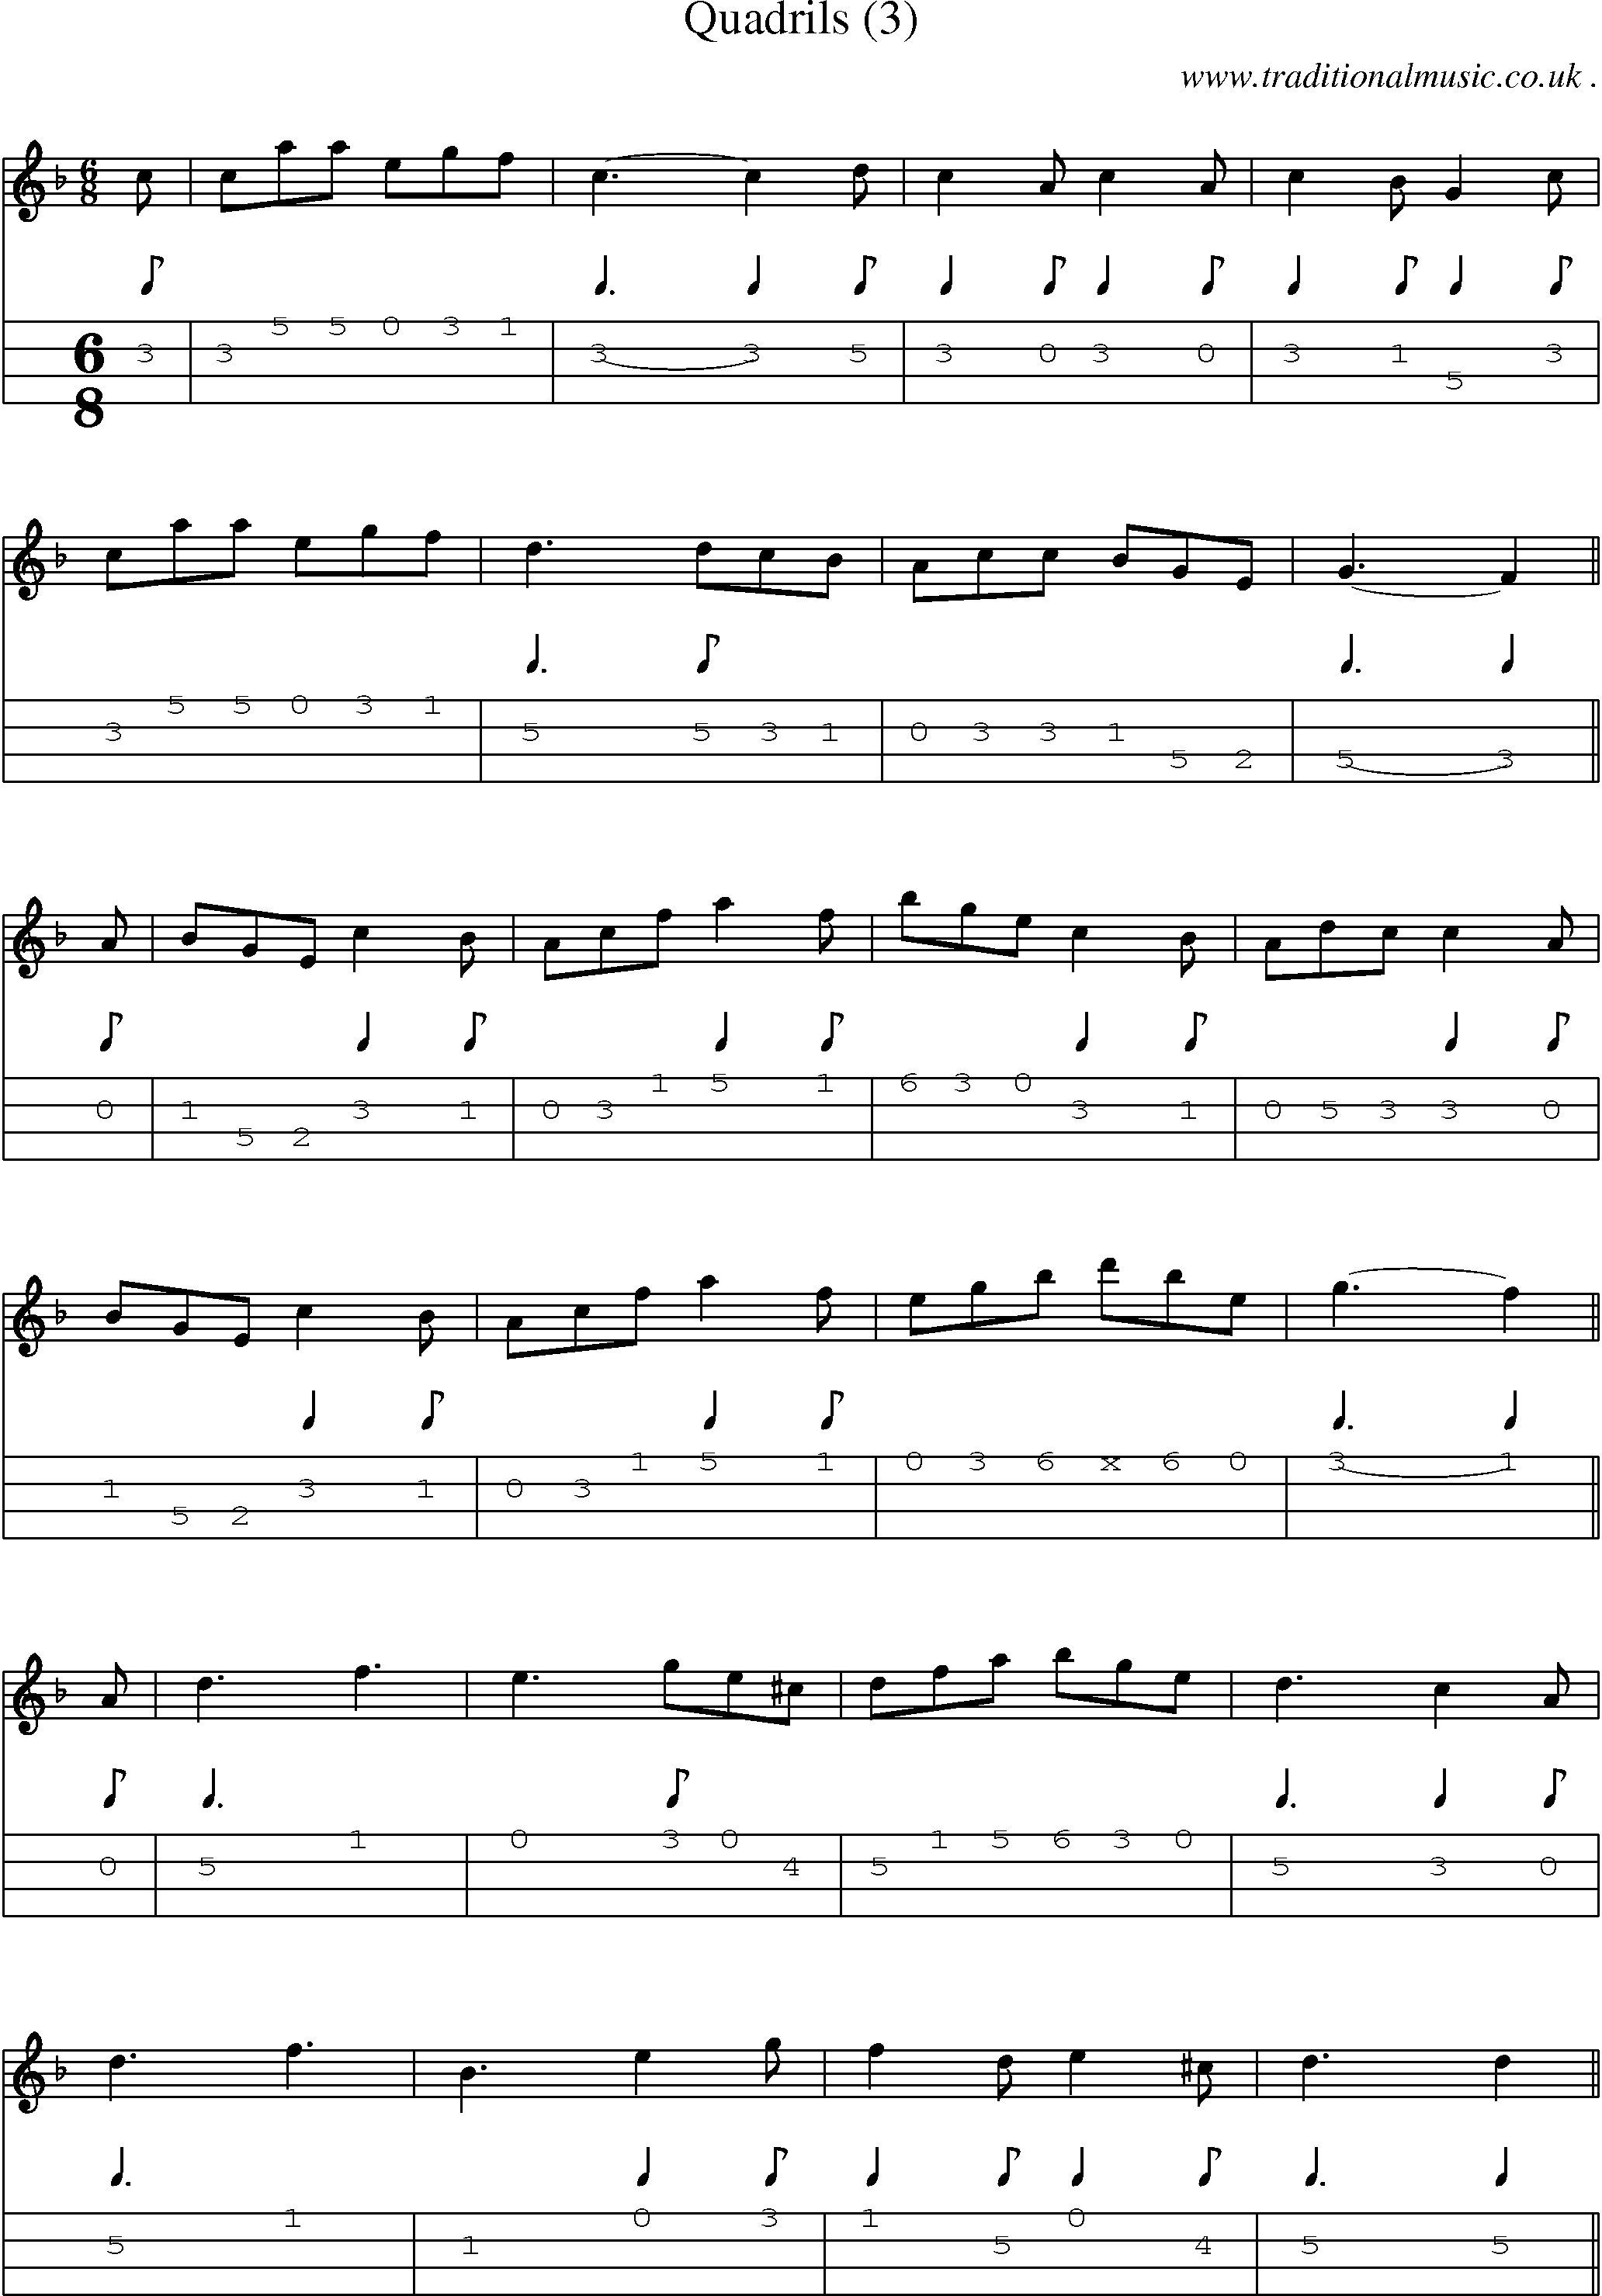 Sheet-Music and Mandolin Tabs for Quadrils (3)